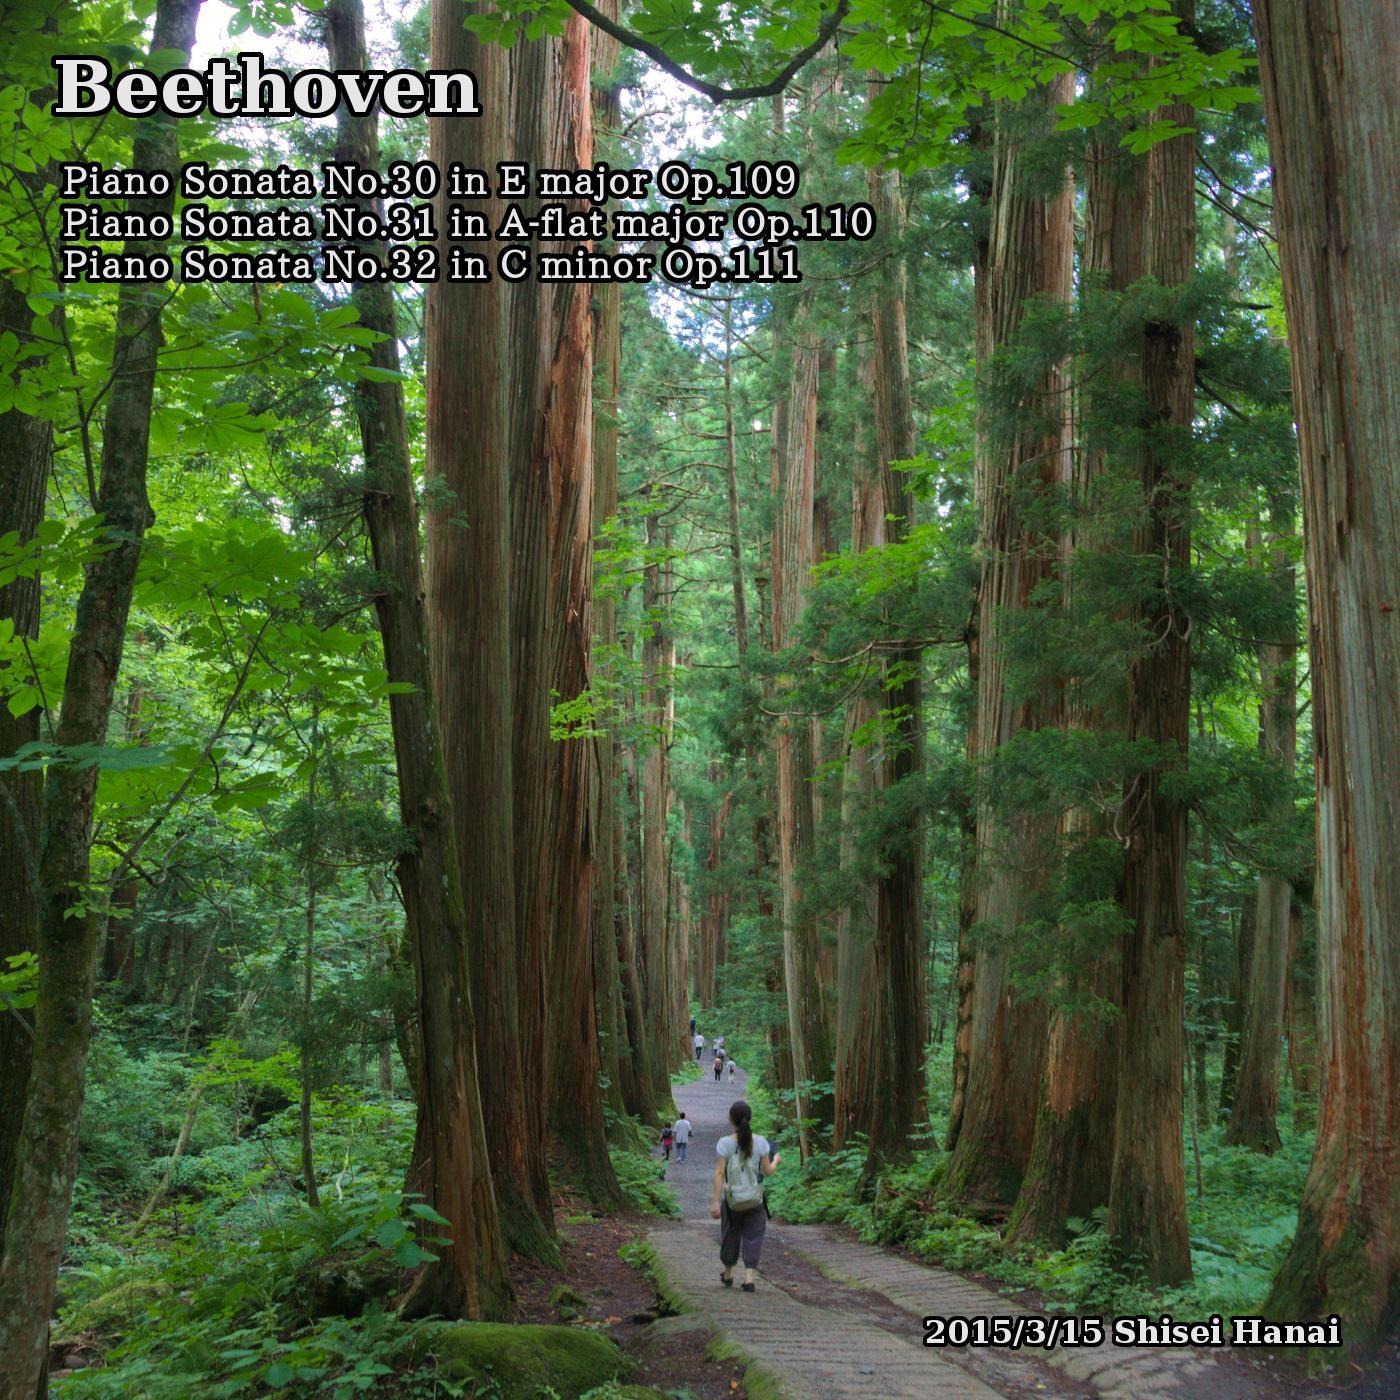 Beethoven Piano Sonata No. 30, 31, 32